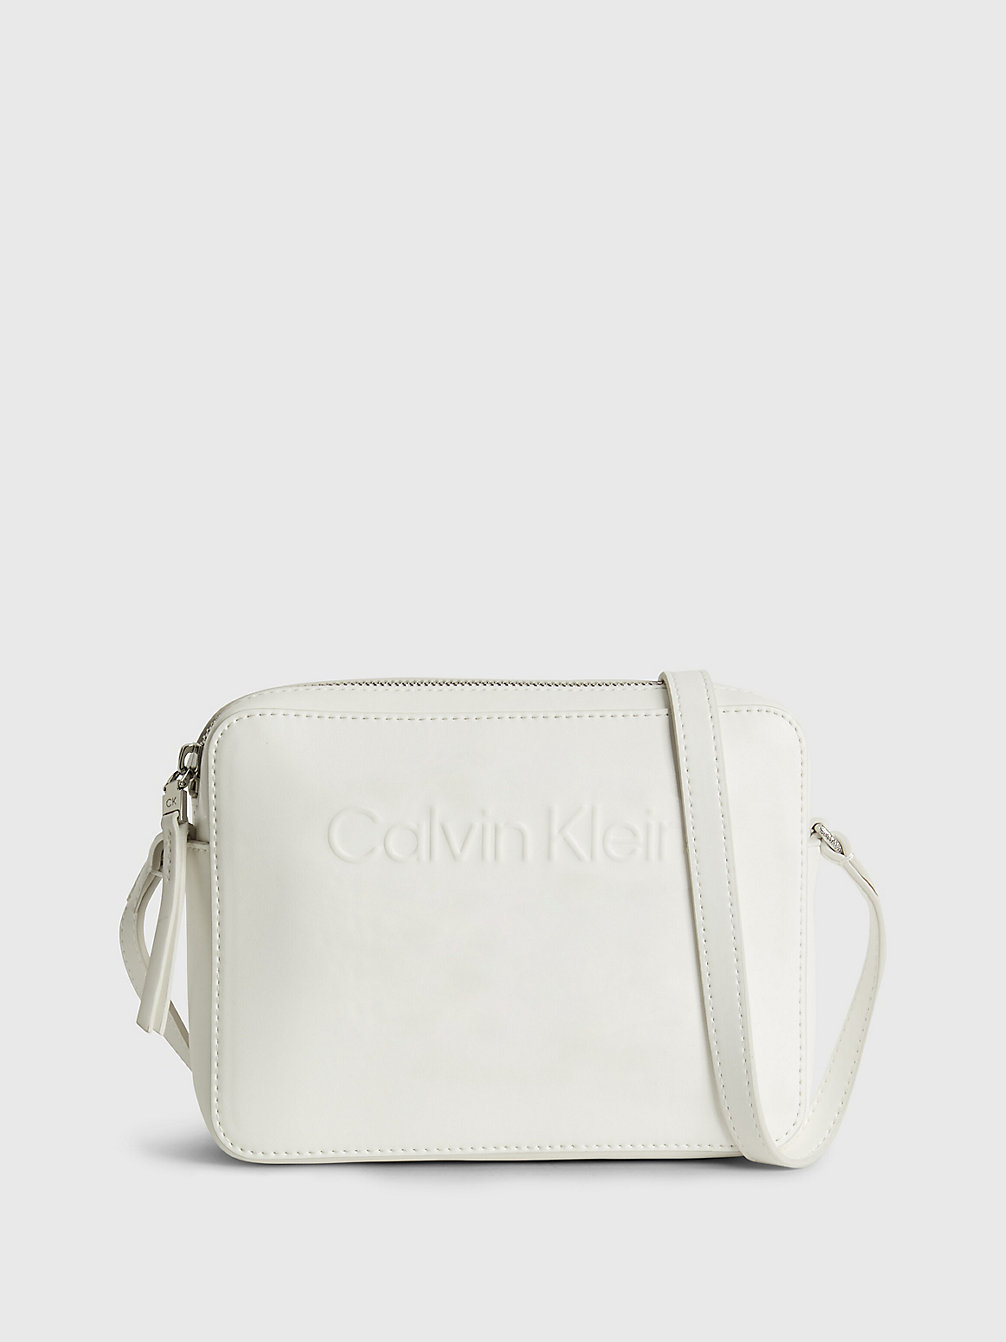 BRIGHT WHITE > Crossbody Bag Aus Recyceltem Material > undefined Damen - Calvin Klein